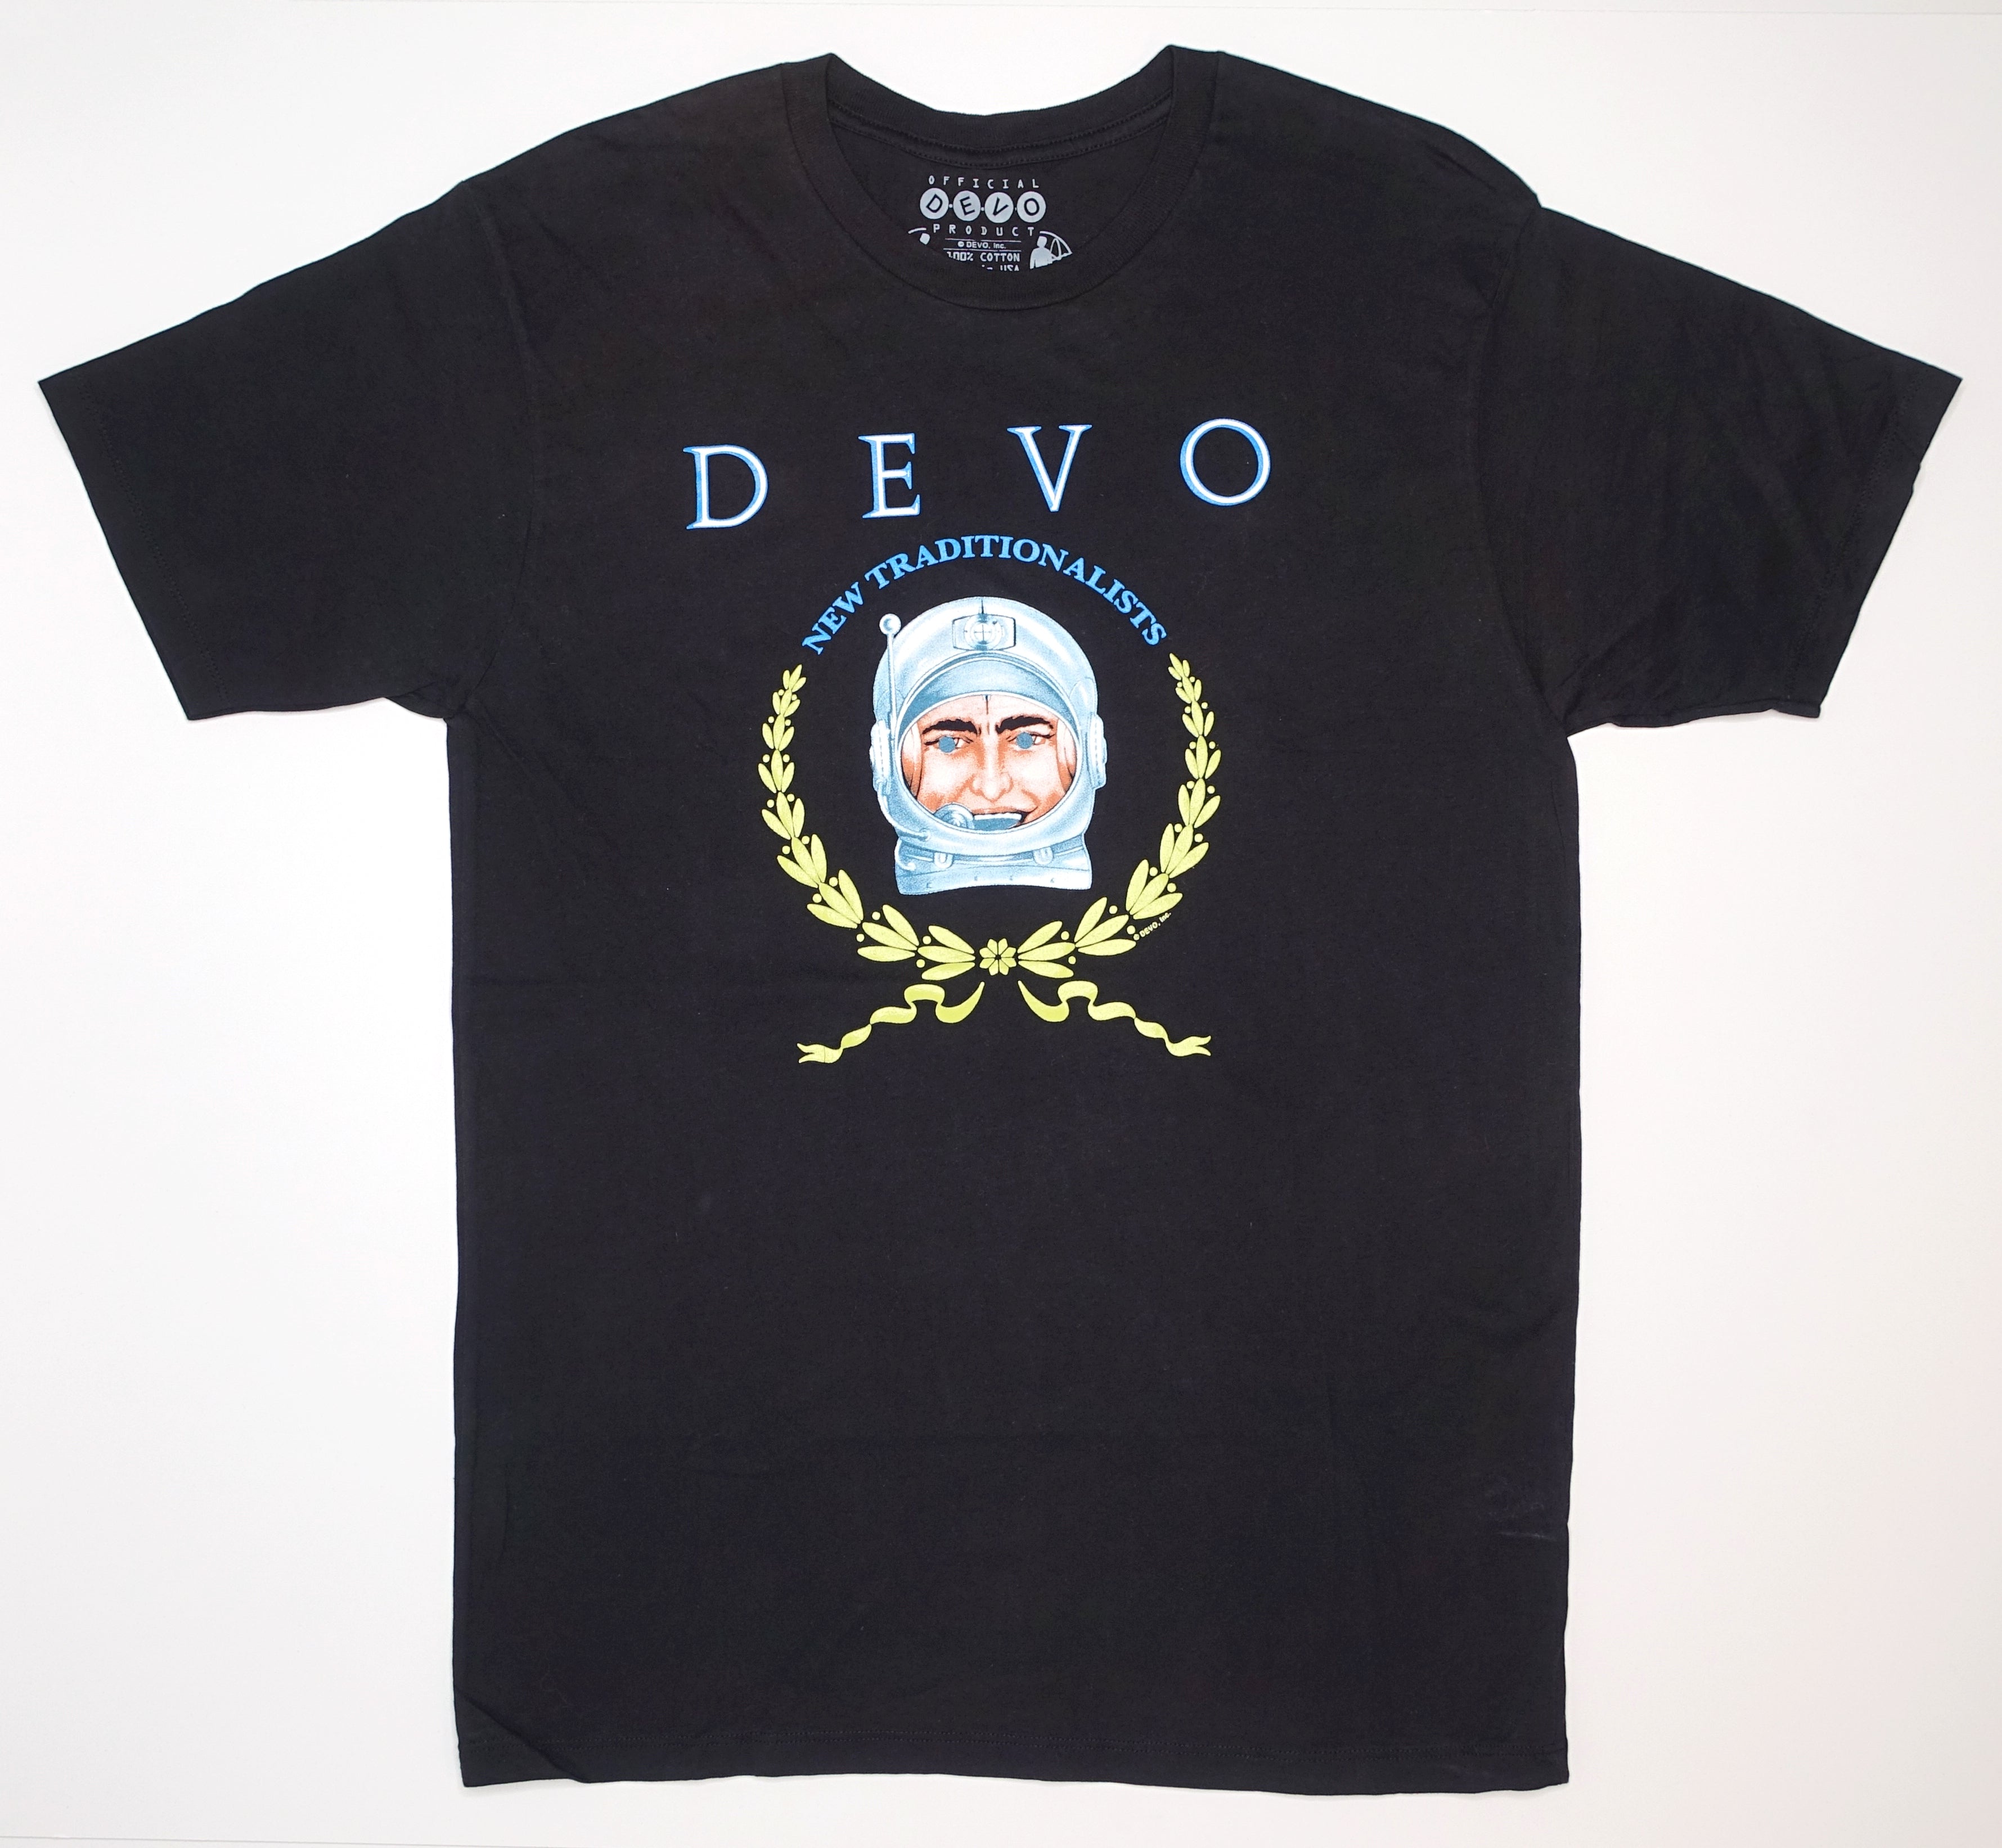 Devo – New Traditionalists 00's Shirt Size Large